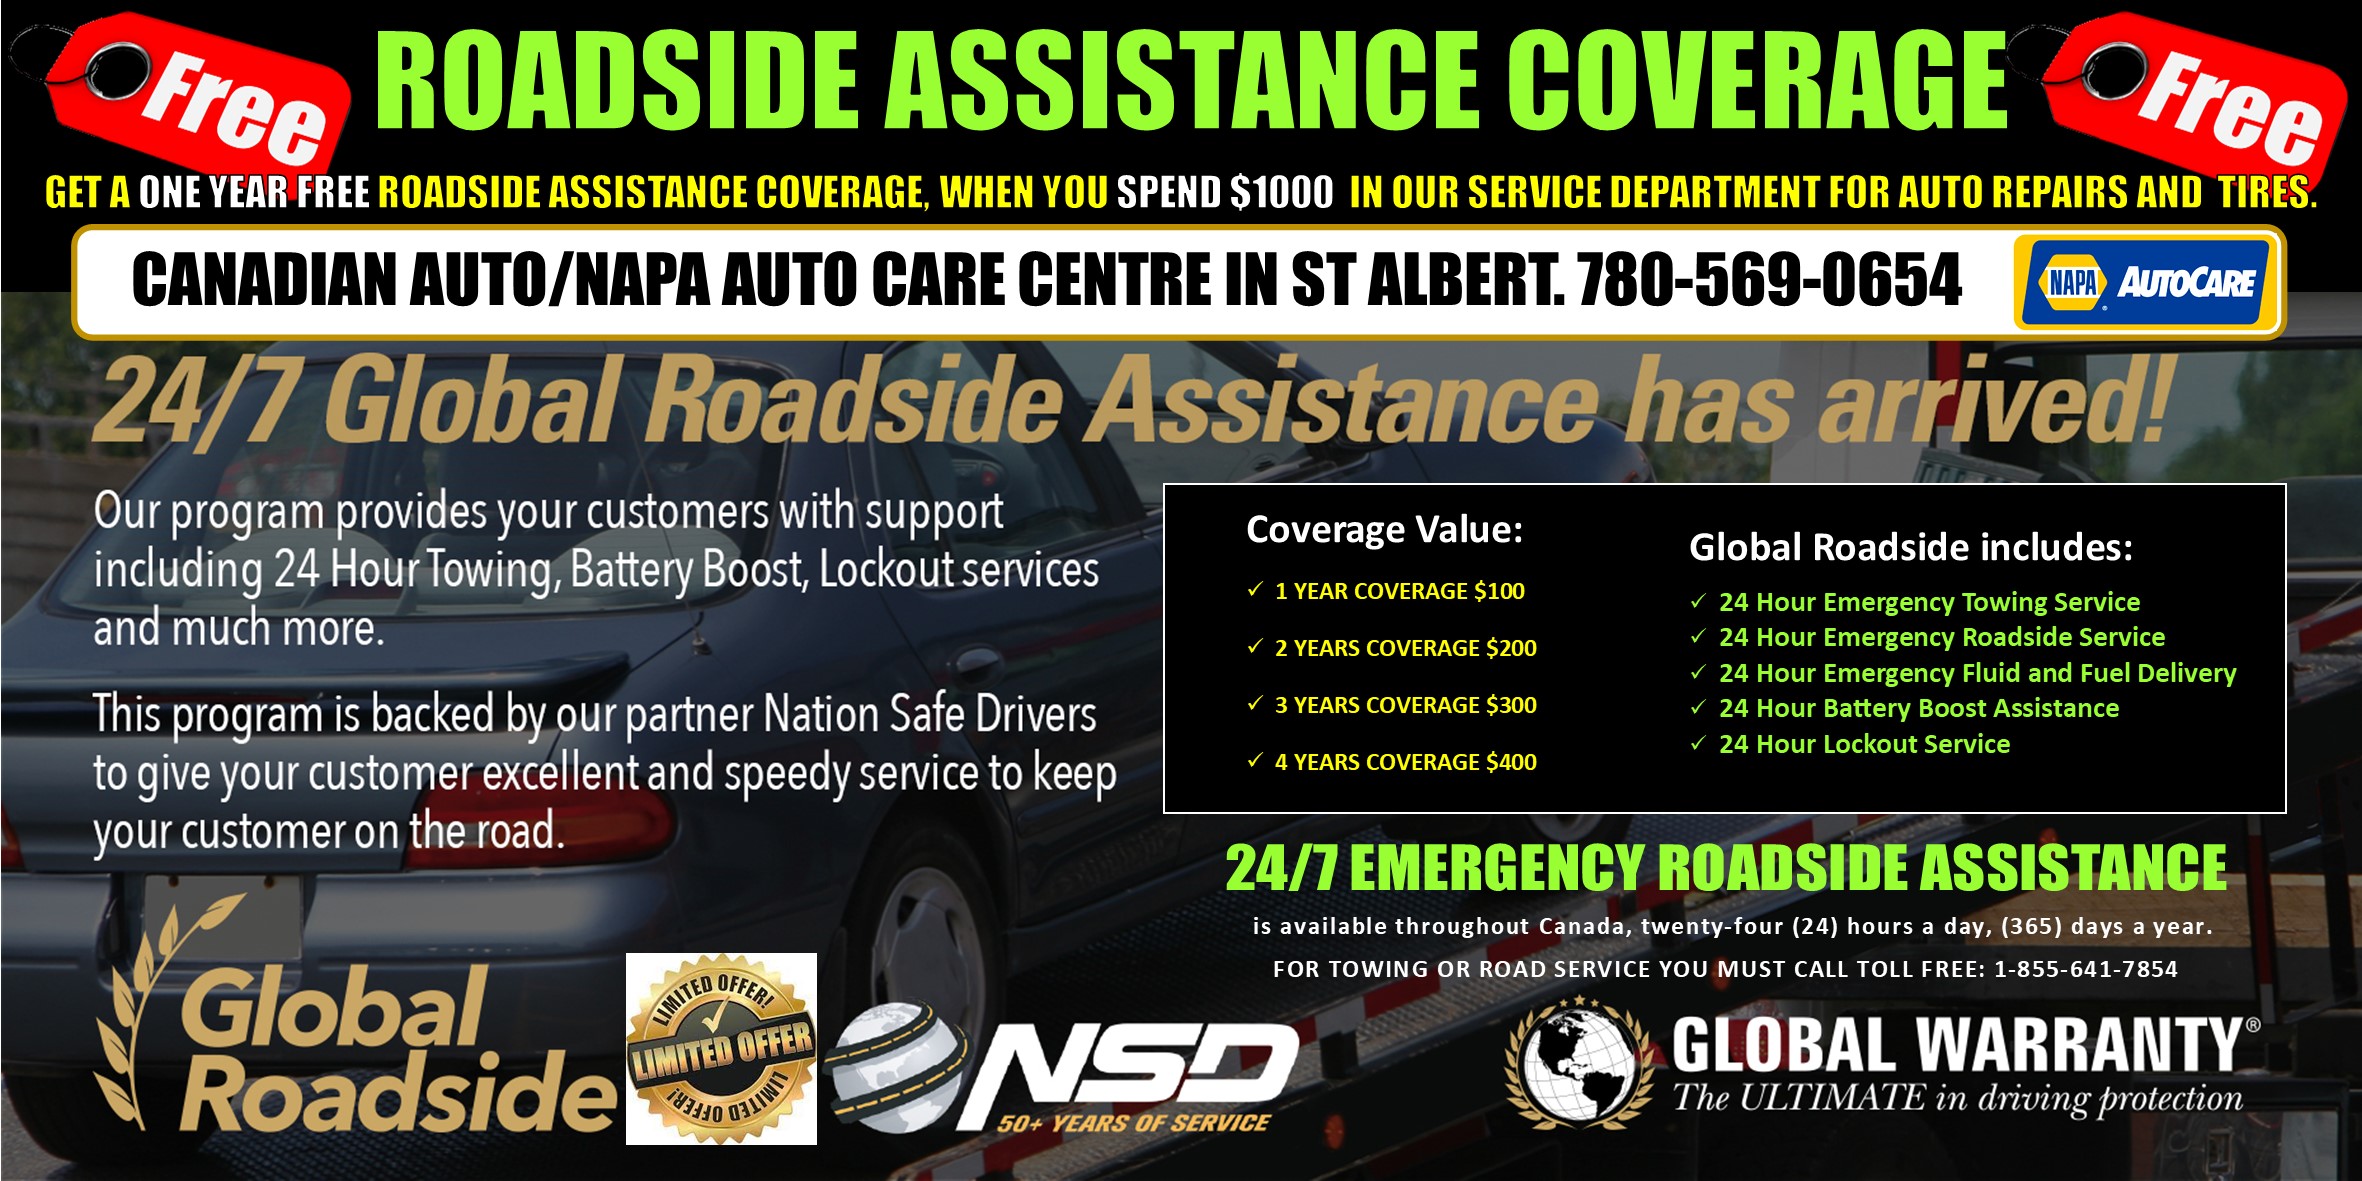 Free Roadside Assistance